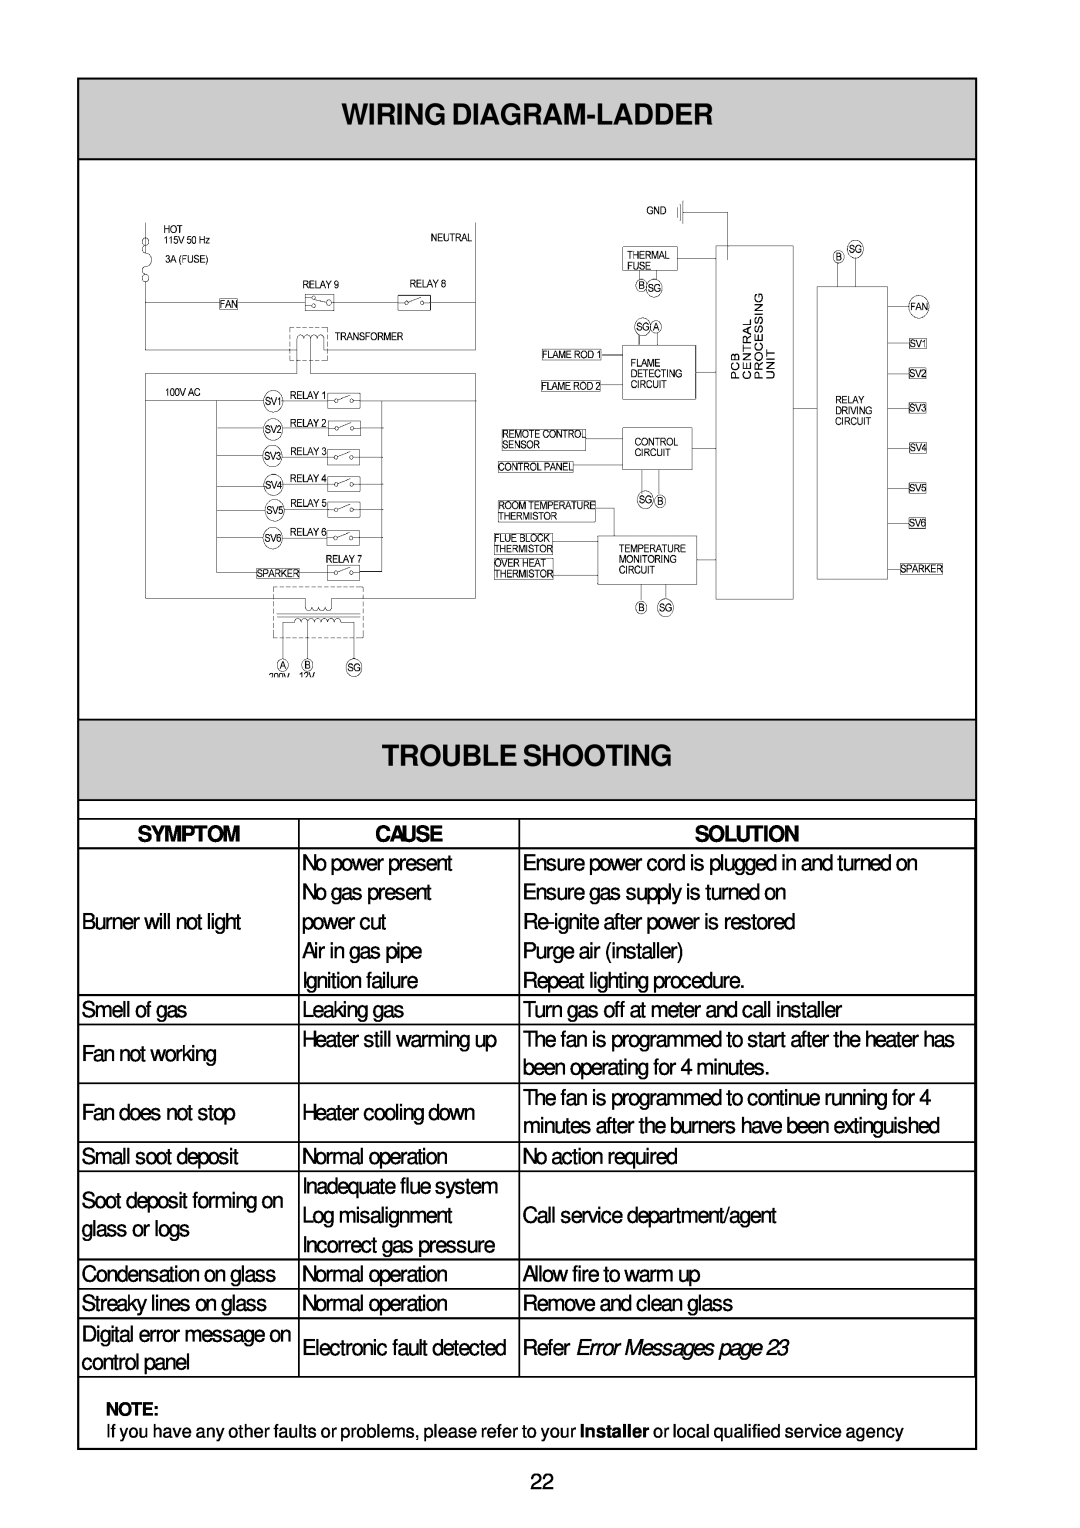 Rinnai IB35ETRLC, IB35ETRN Wiring Diagram-Ladder, Trouble Shooting, Symptom, Cause, Solution, Refer Error Messages page 